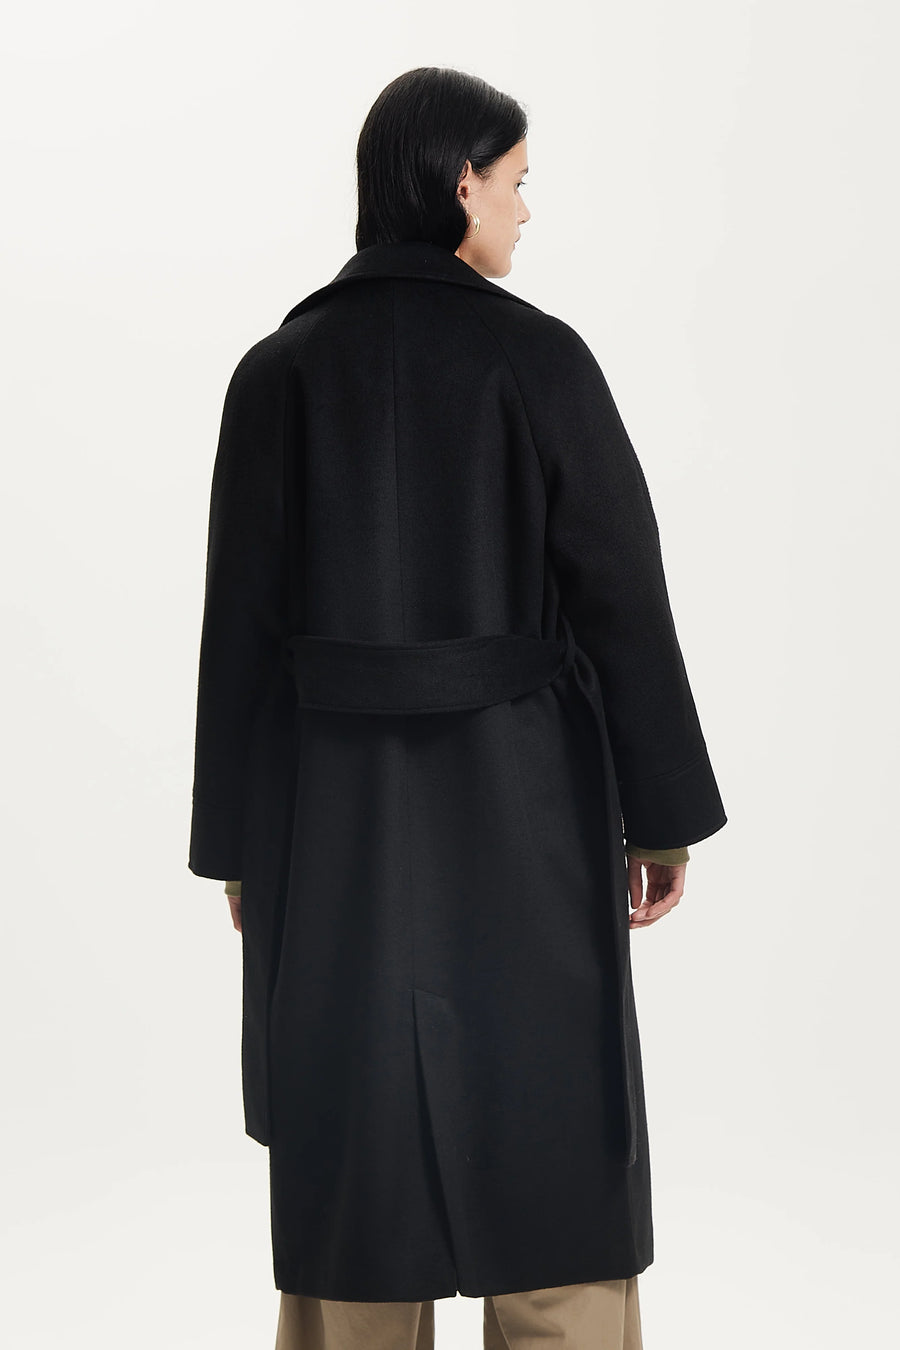 THIRD FORM II UNCOVER Woolen Trench Coat - black